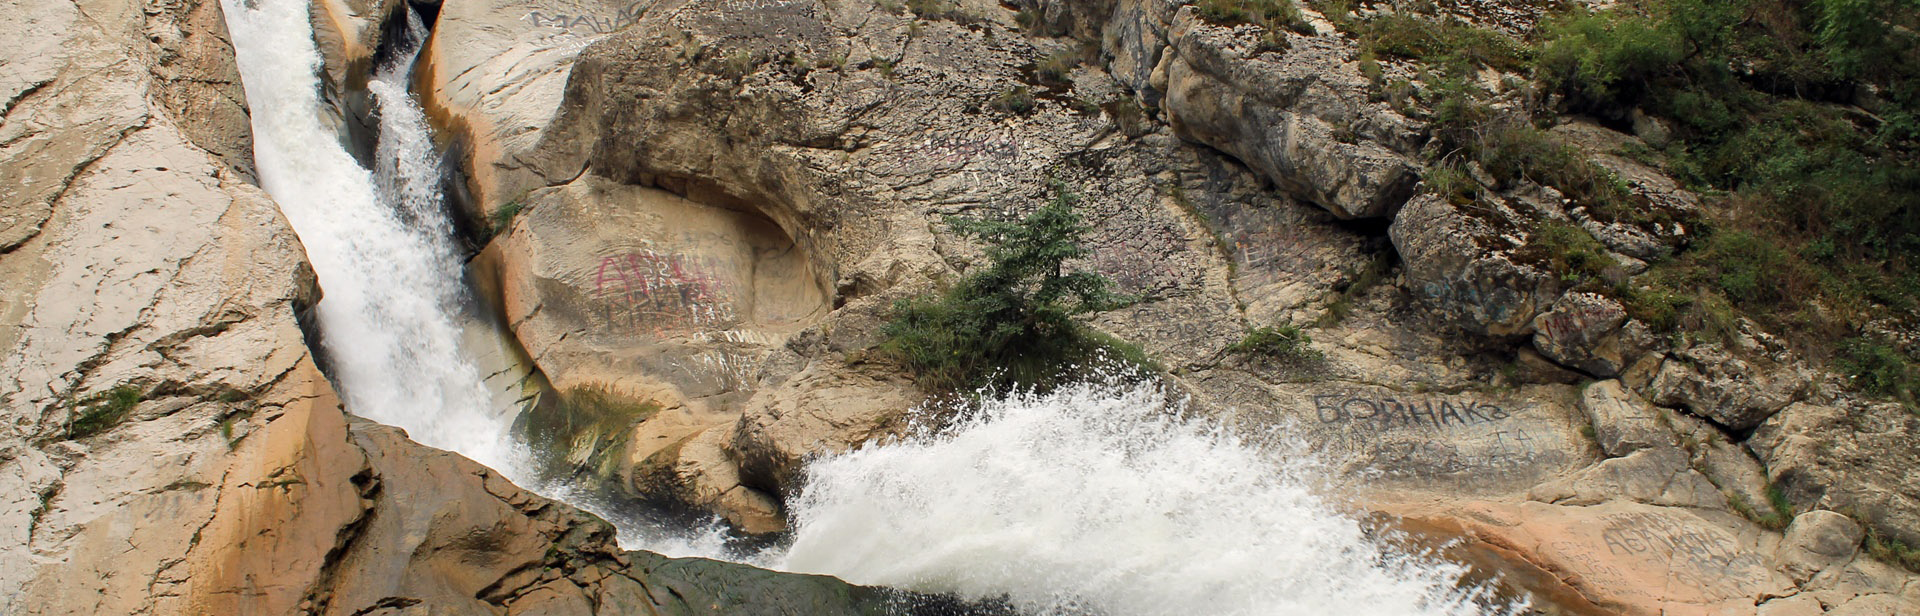 Ханагский водопад кавказский пленник